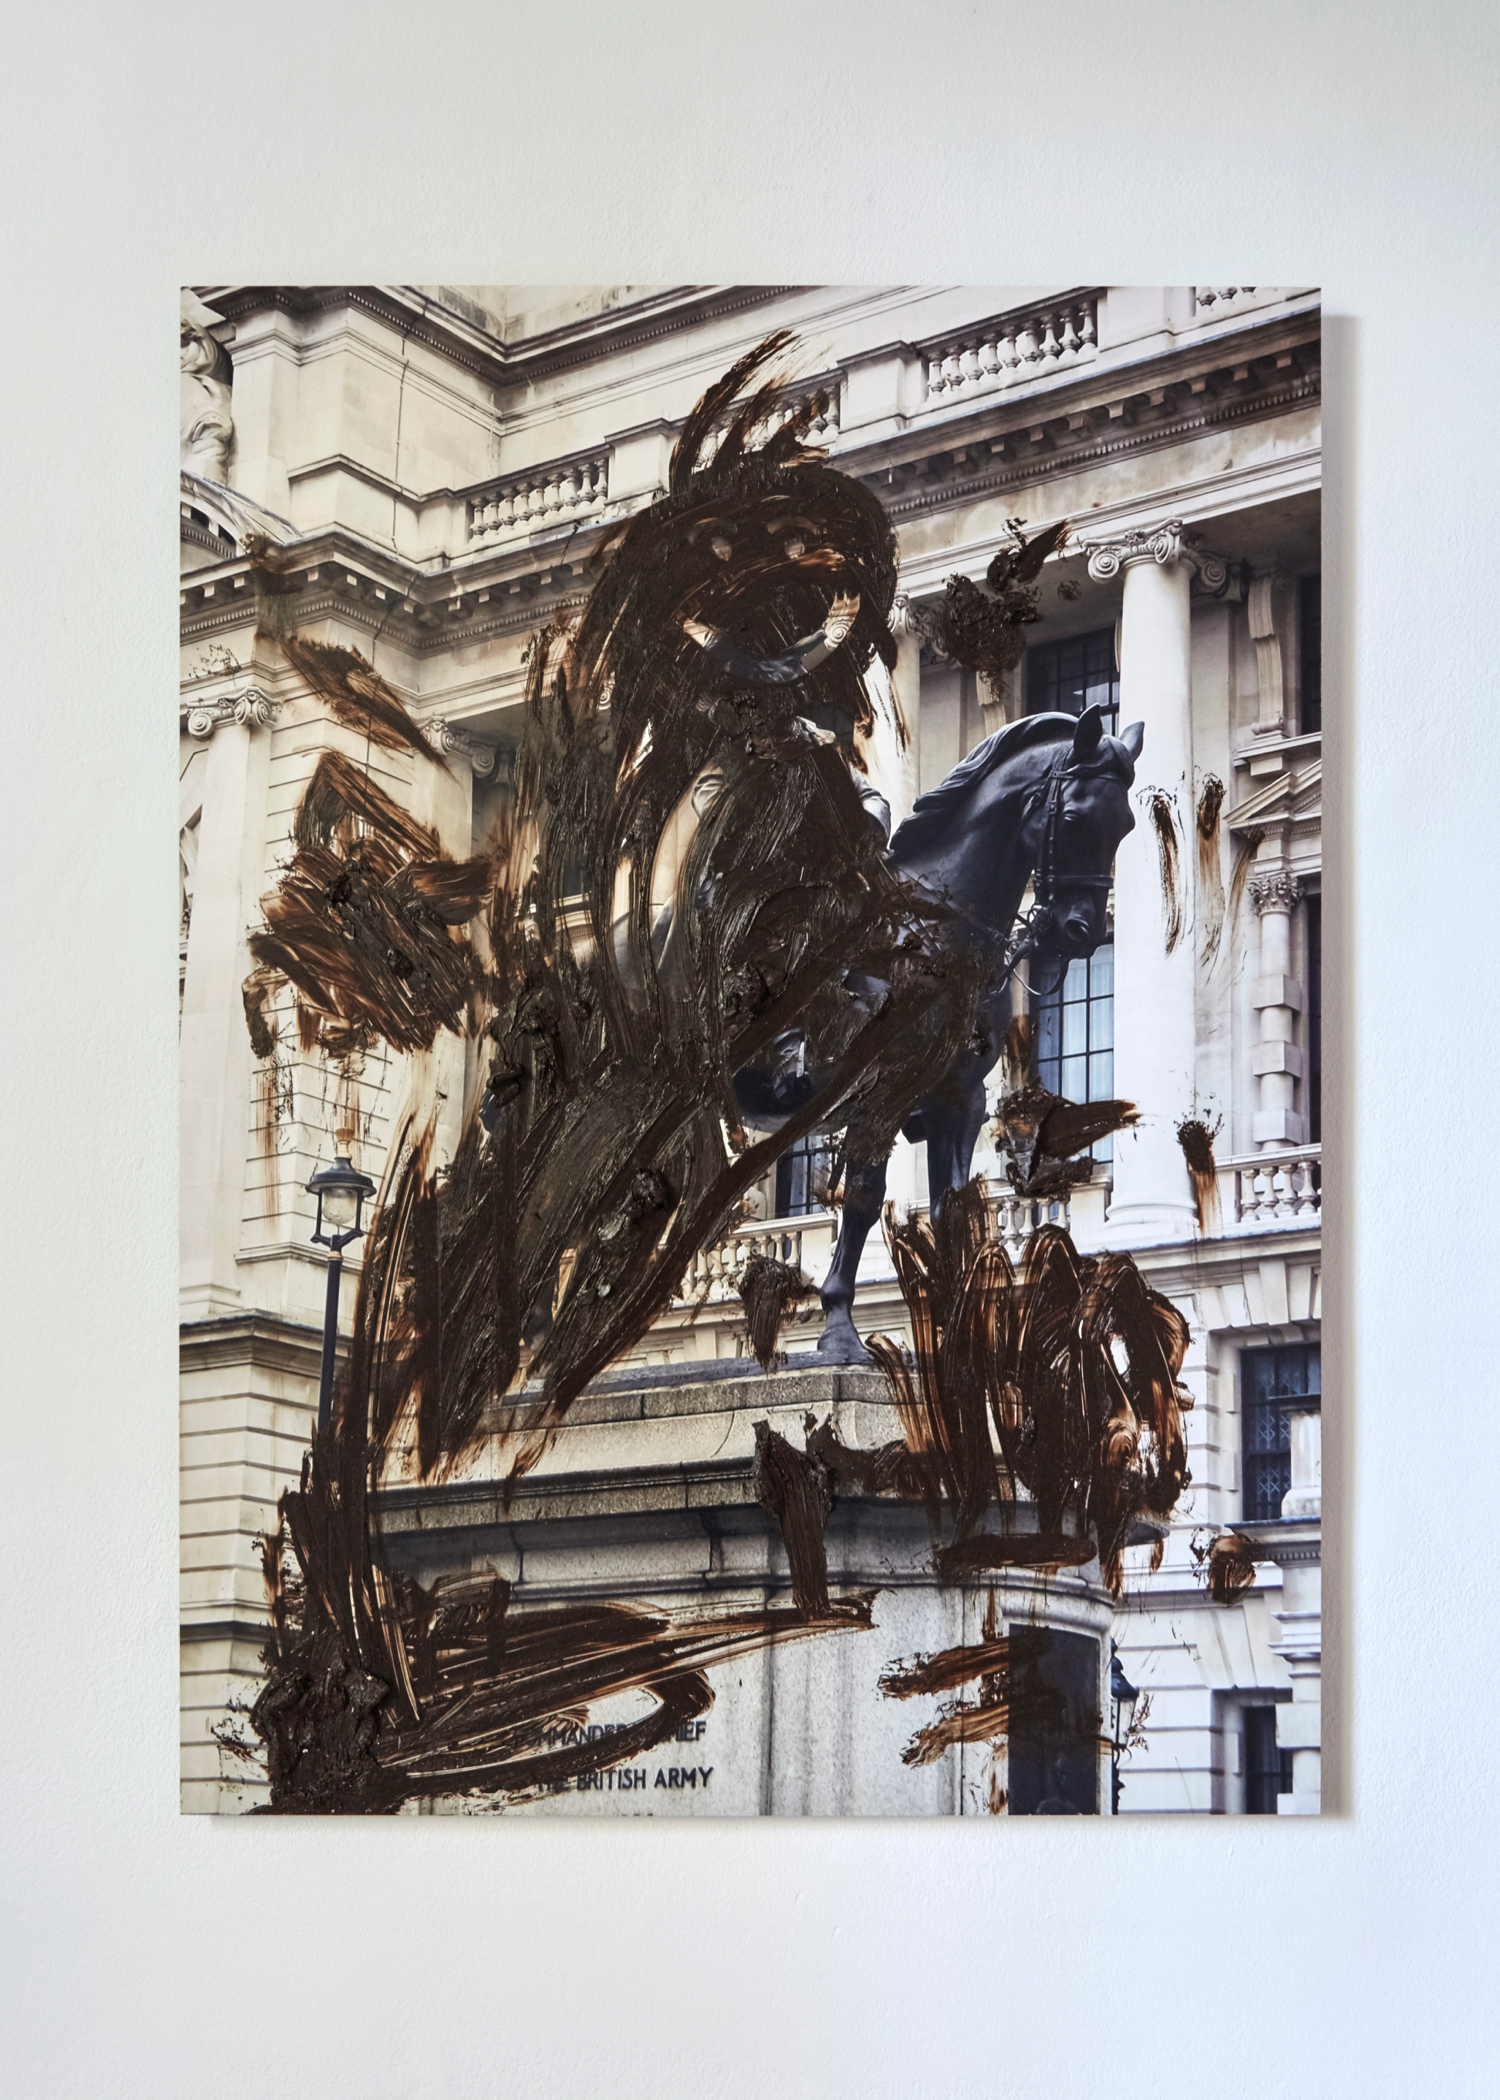 Jamie Fitzpatrick, 'RGE LLIAM F H ND F CAMBIDG’, 2016, C-type print on aluminium and oil bar, 52 x 69.5 cm